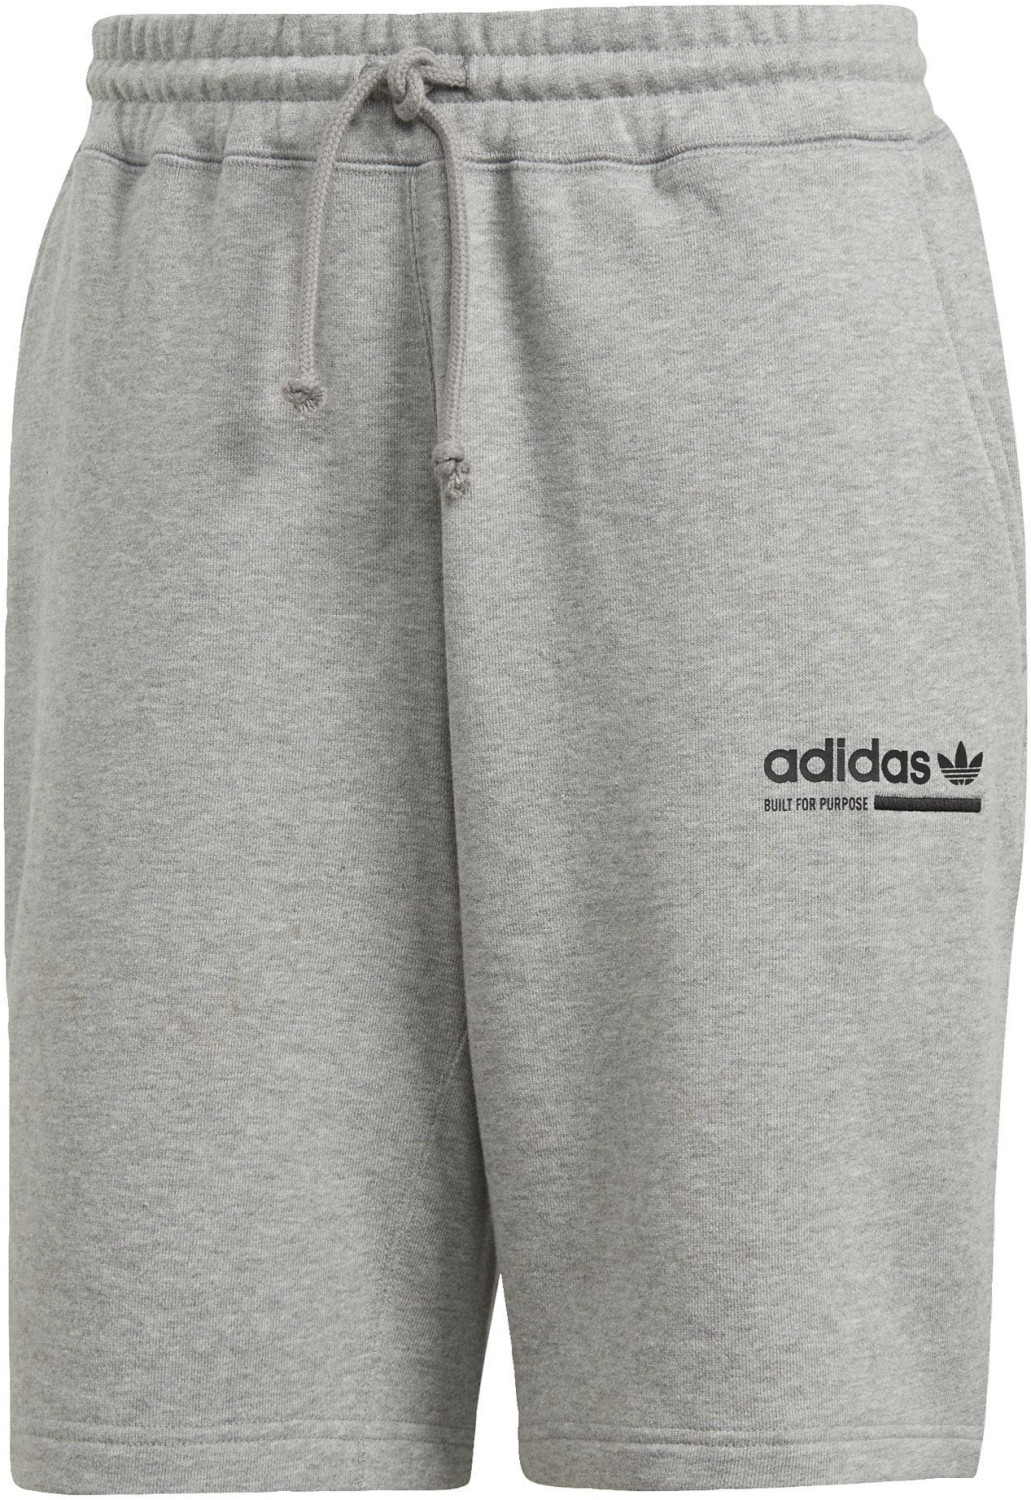 Adidas Kaval Shorts medium grey heather